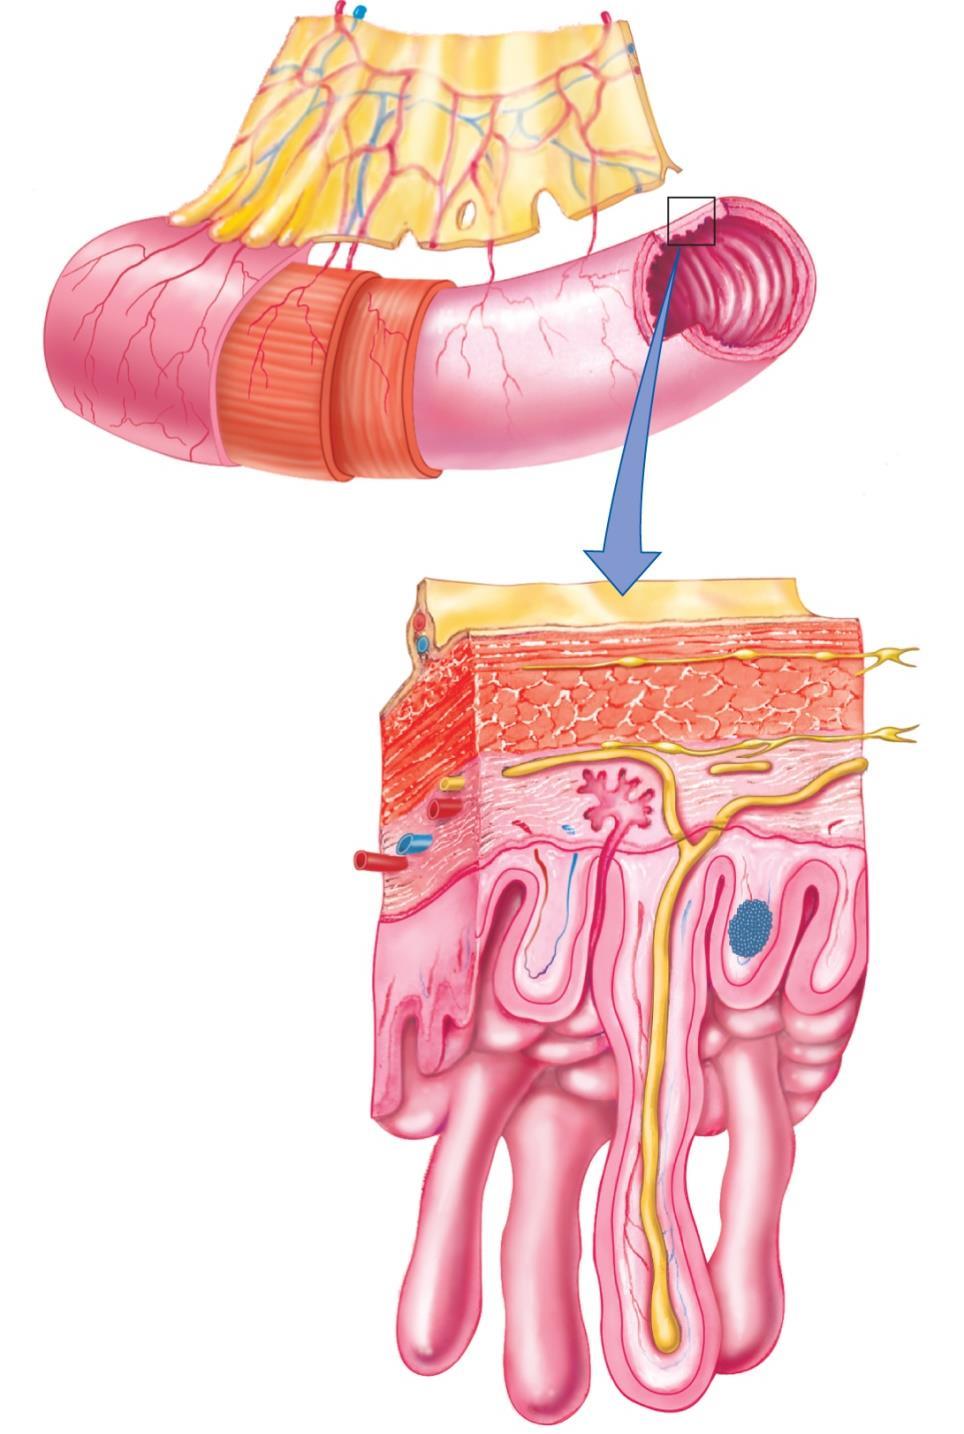 Layers of the GI Tract Mucosa vs. Serosa? Muscle layers?